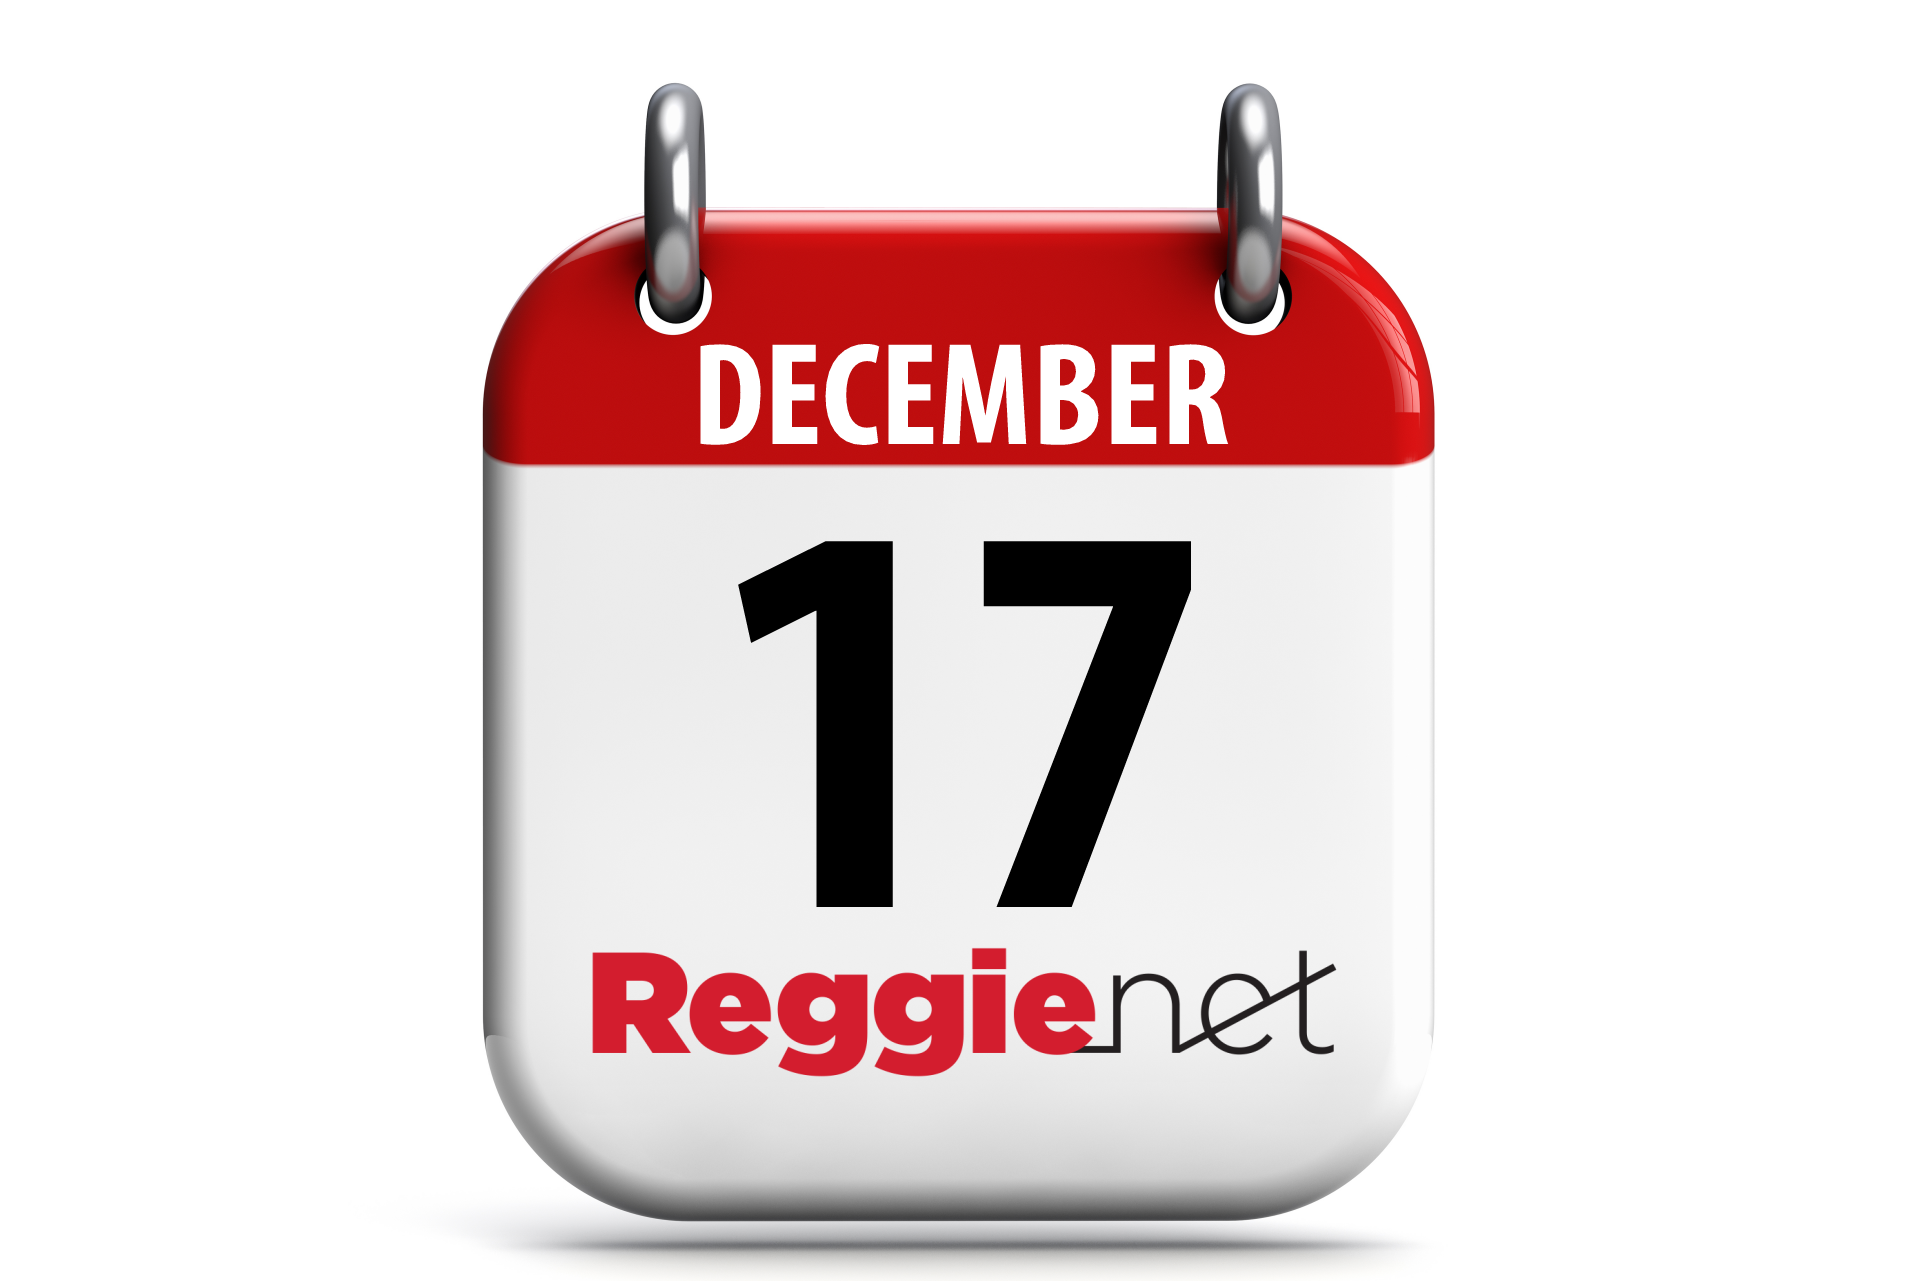 Calendar showing December 17 and ReggieNet logo.